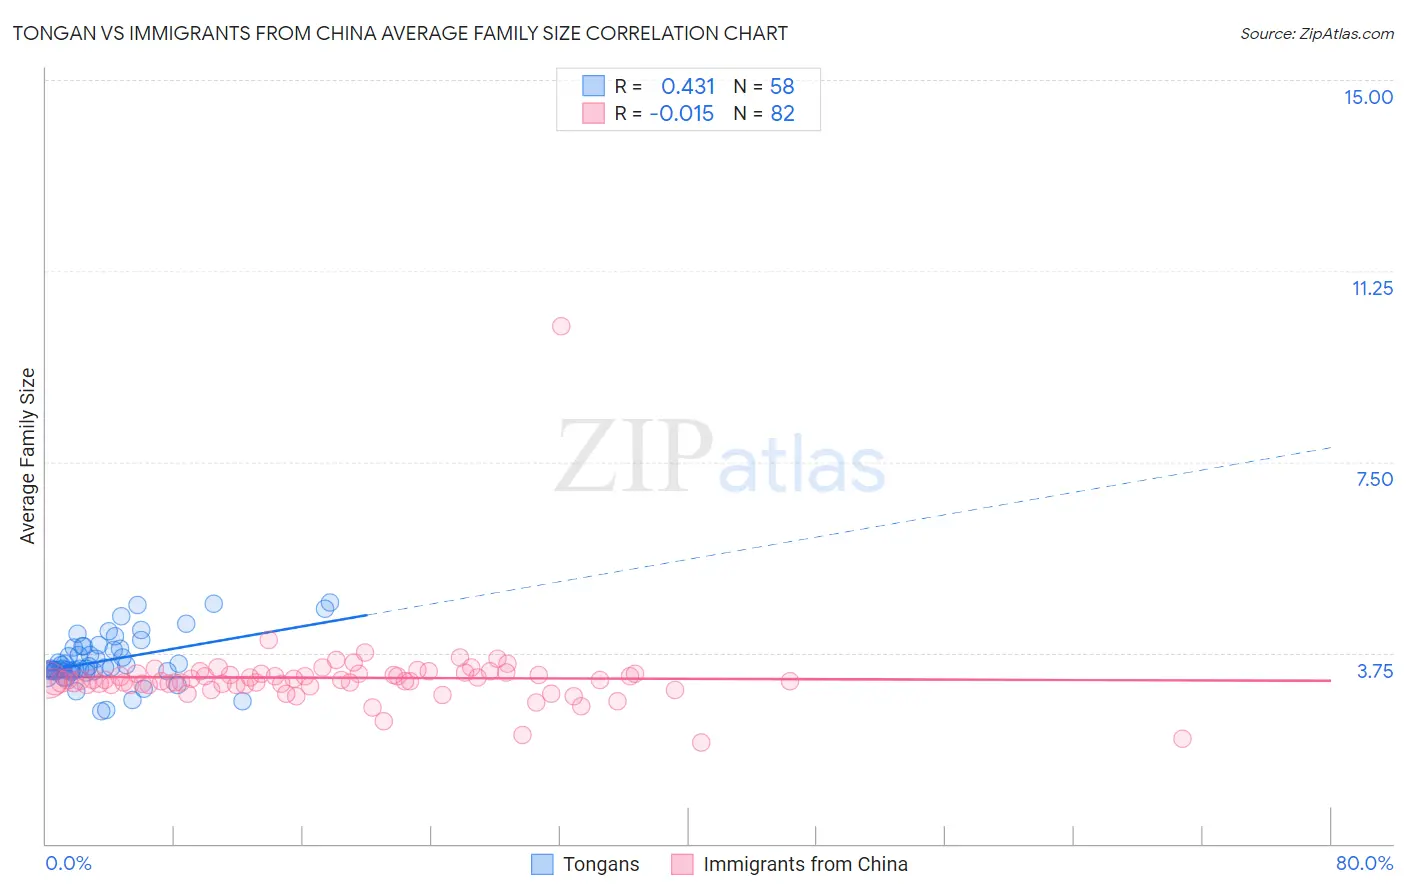 Tongan vs Immigrants from China Average Family Size